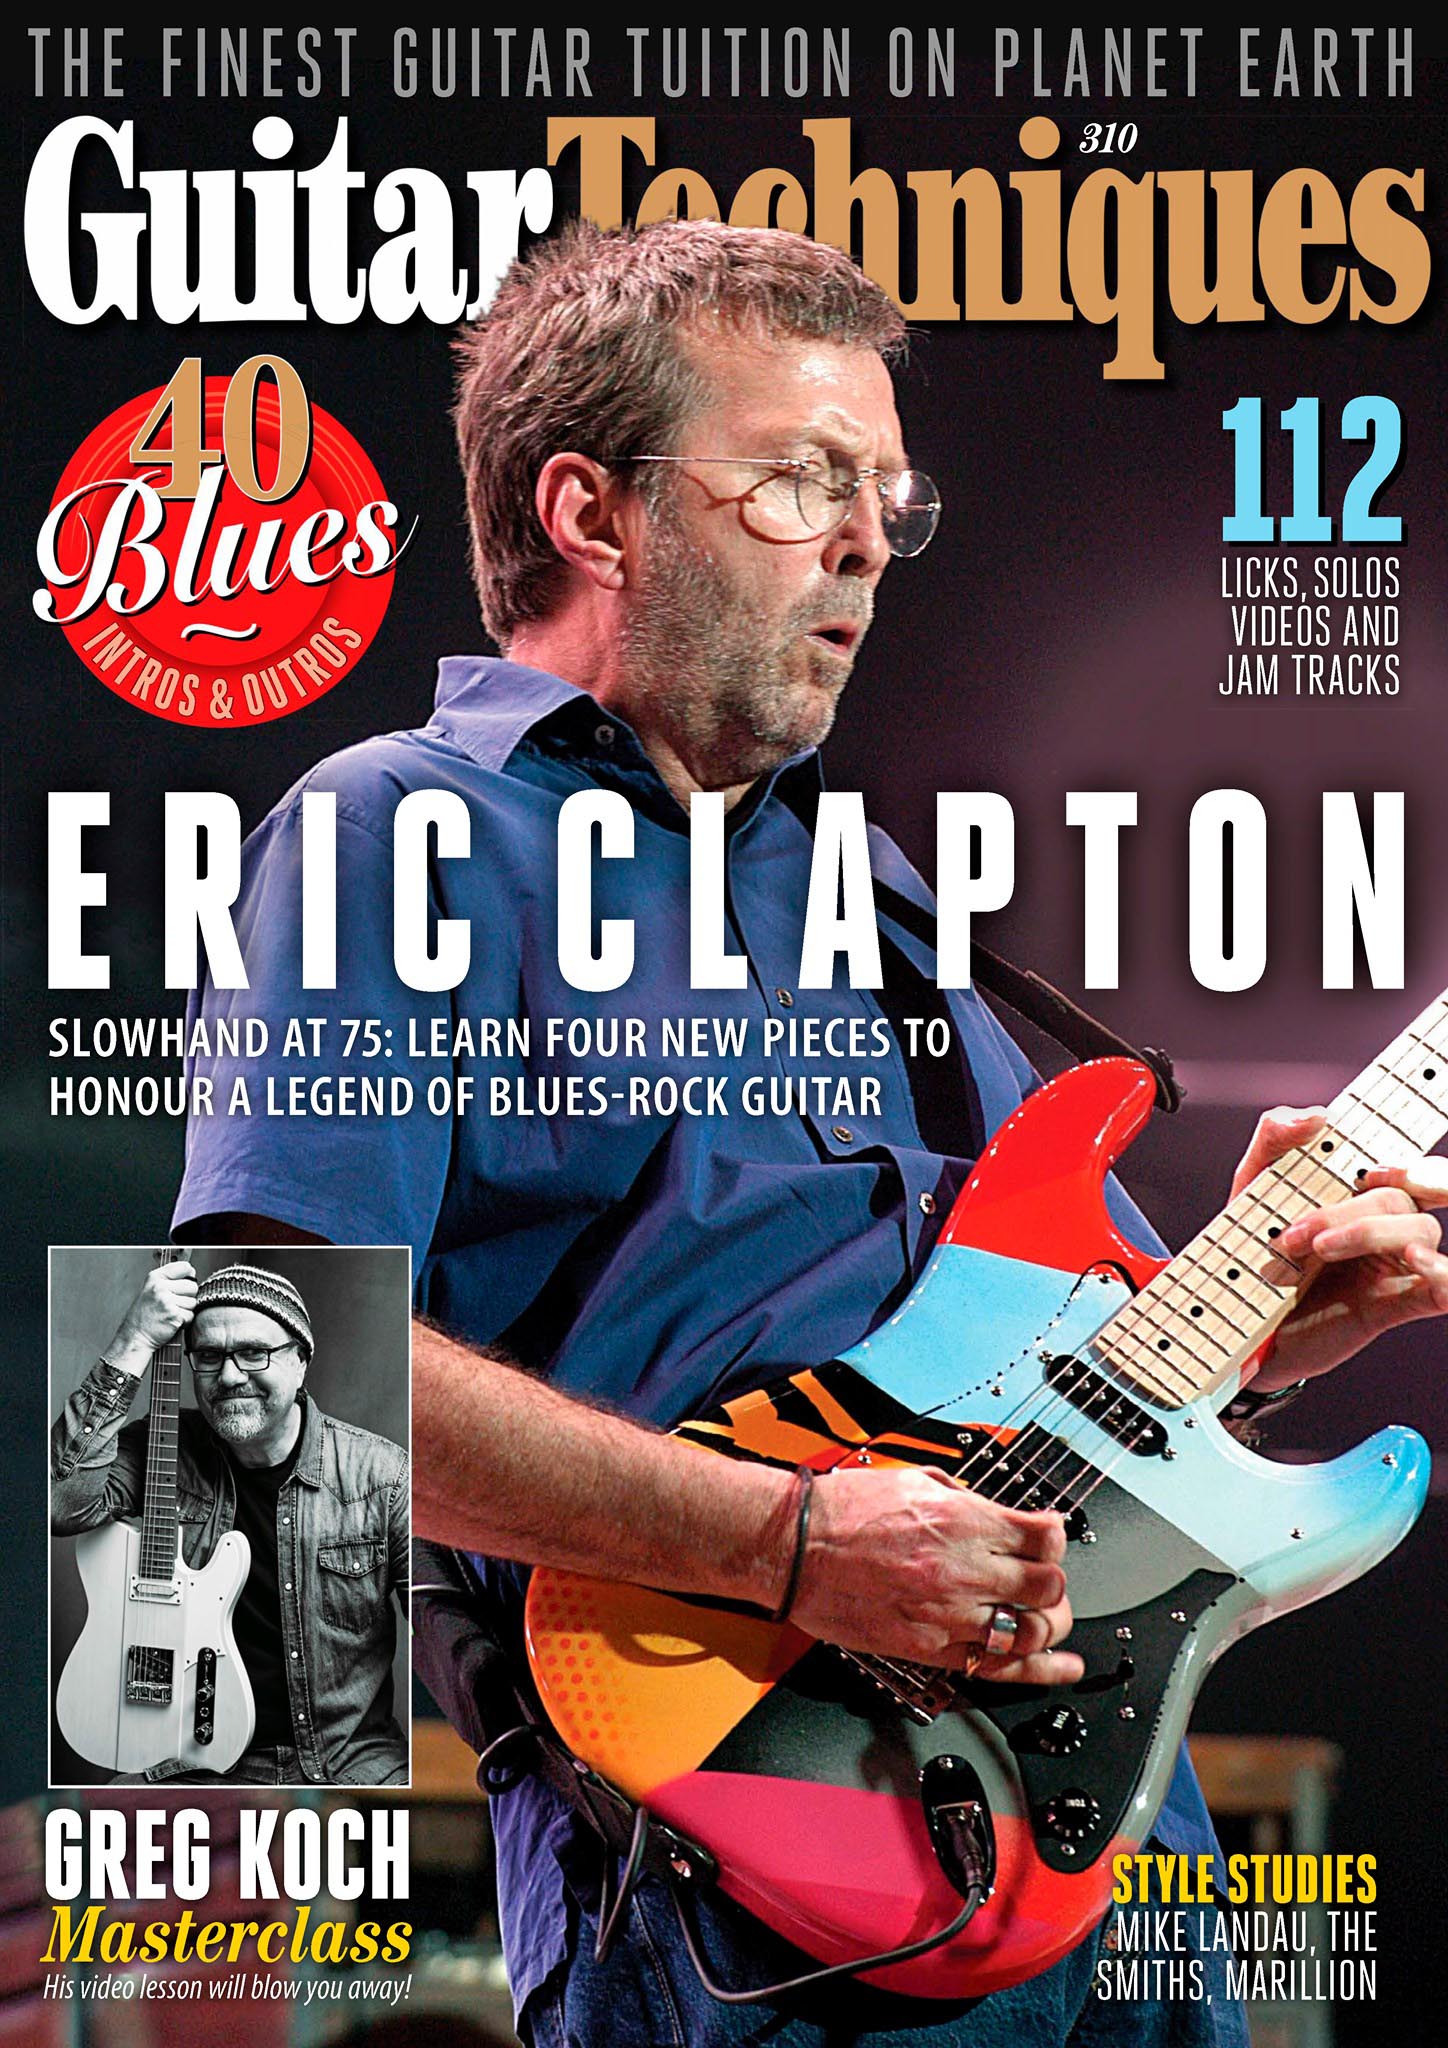 EC_2020 Guitar Techniques July Cover.jpg